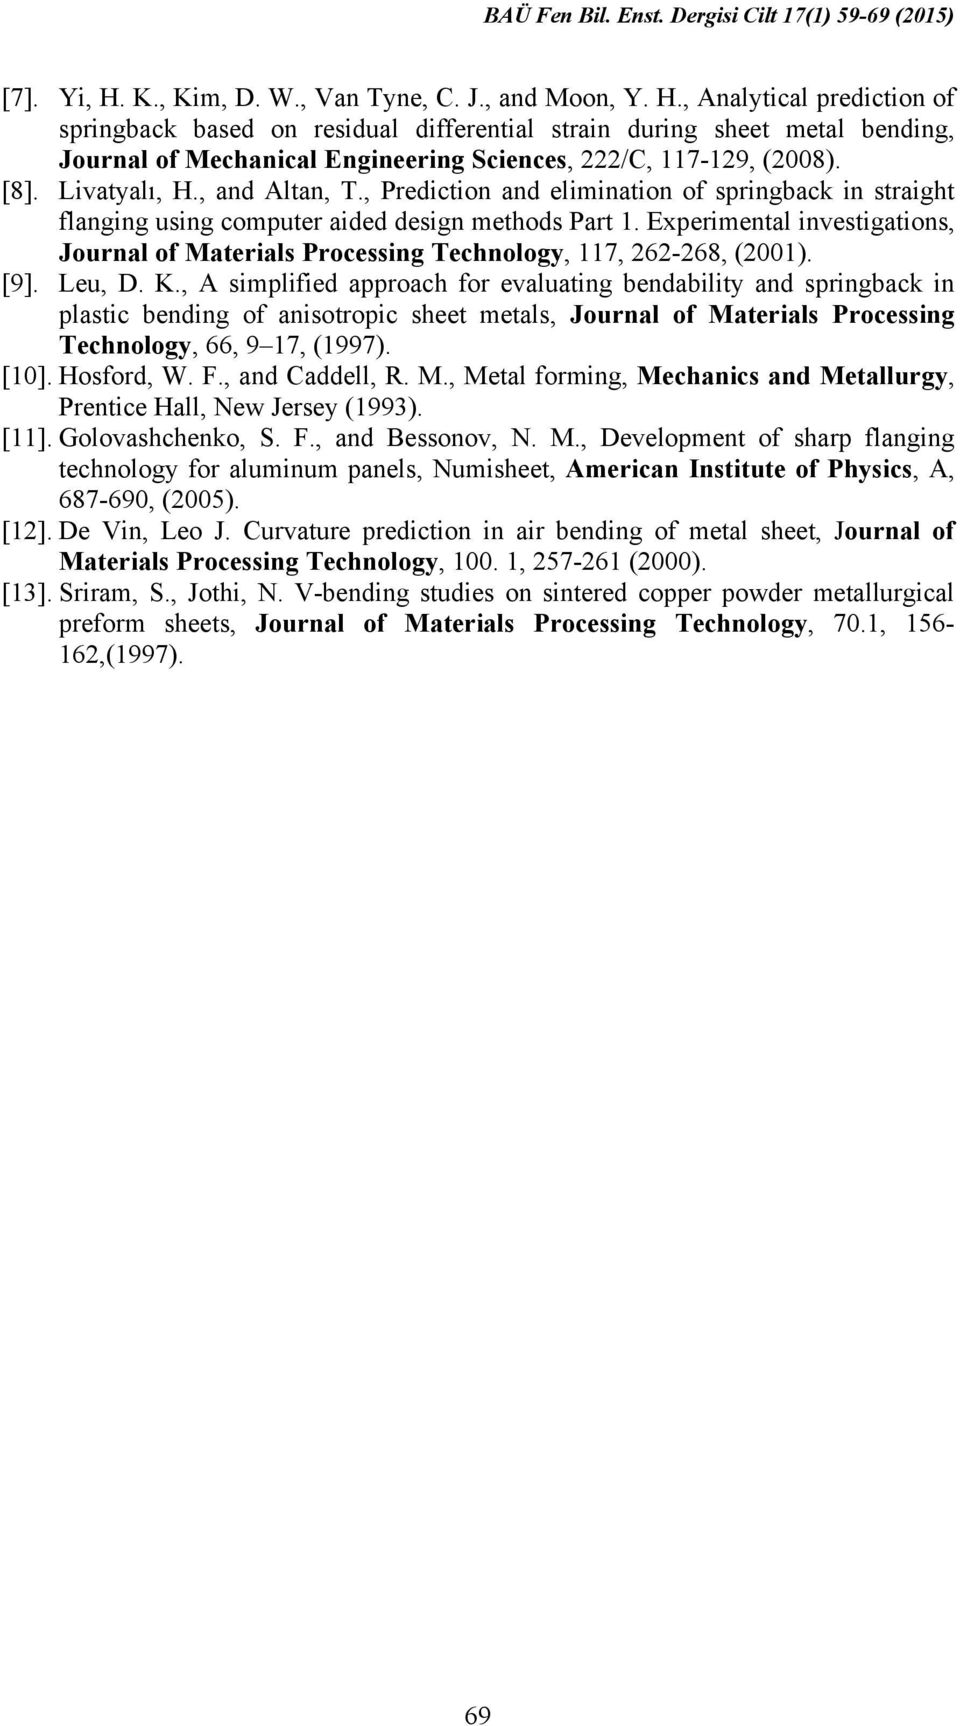 Experimental investigations, Journal of Materials Processing Technology, 117, 262-268, (2001). [9]. Leu, D. K.